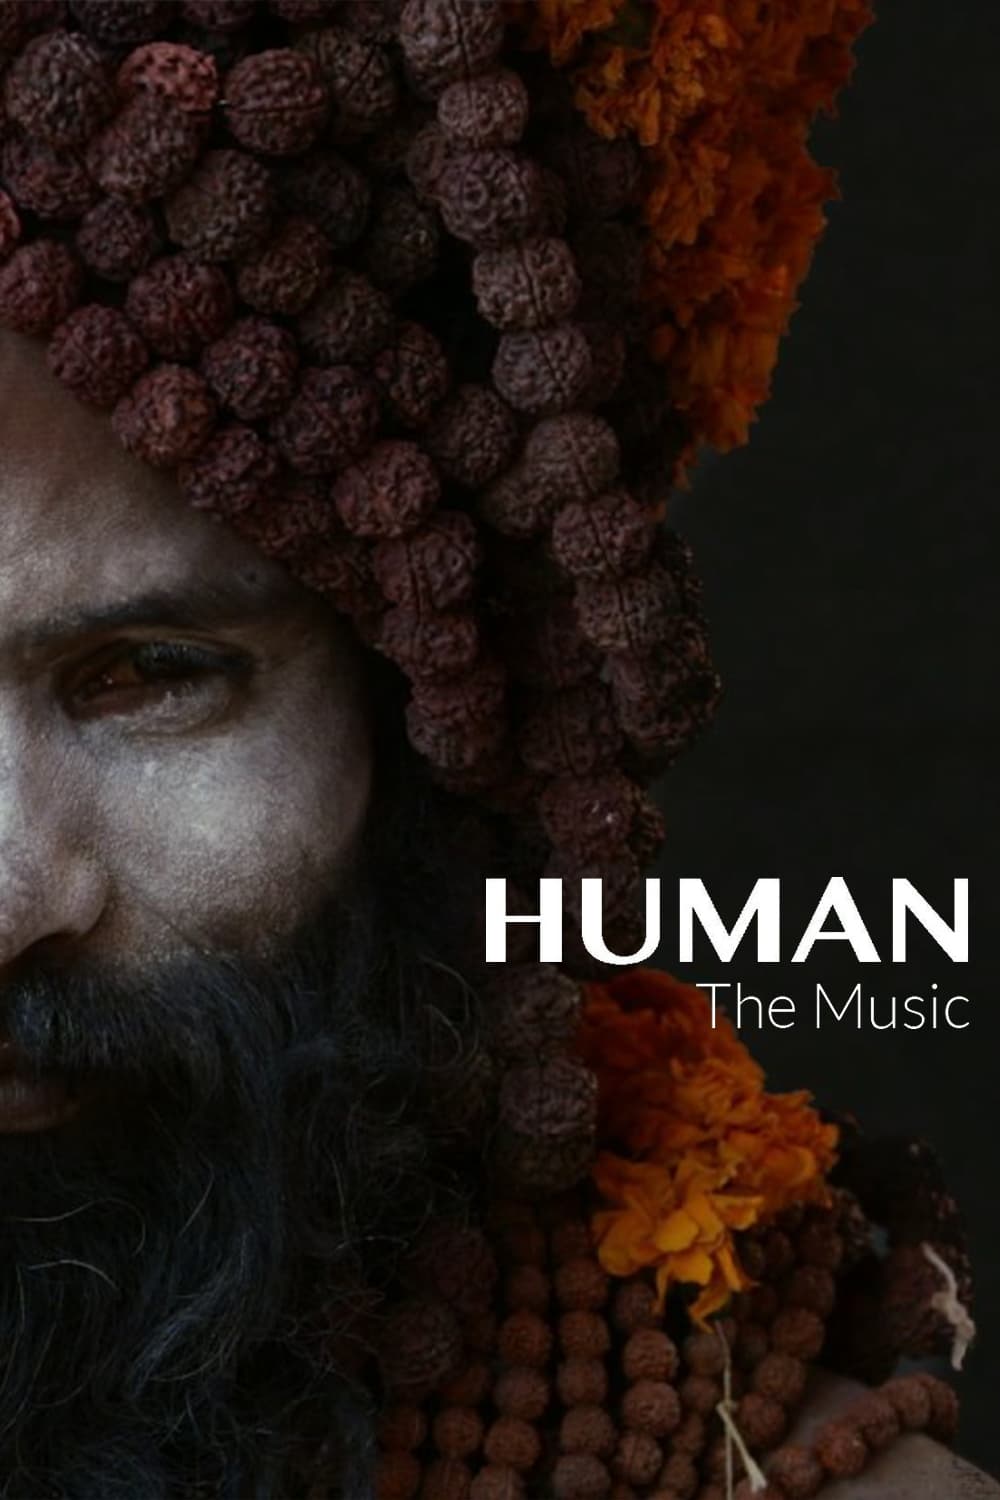 Human's Music